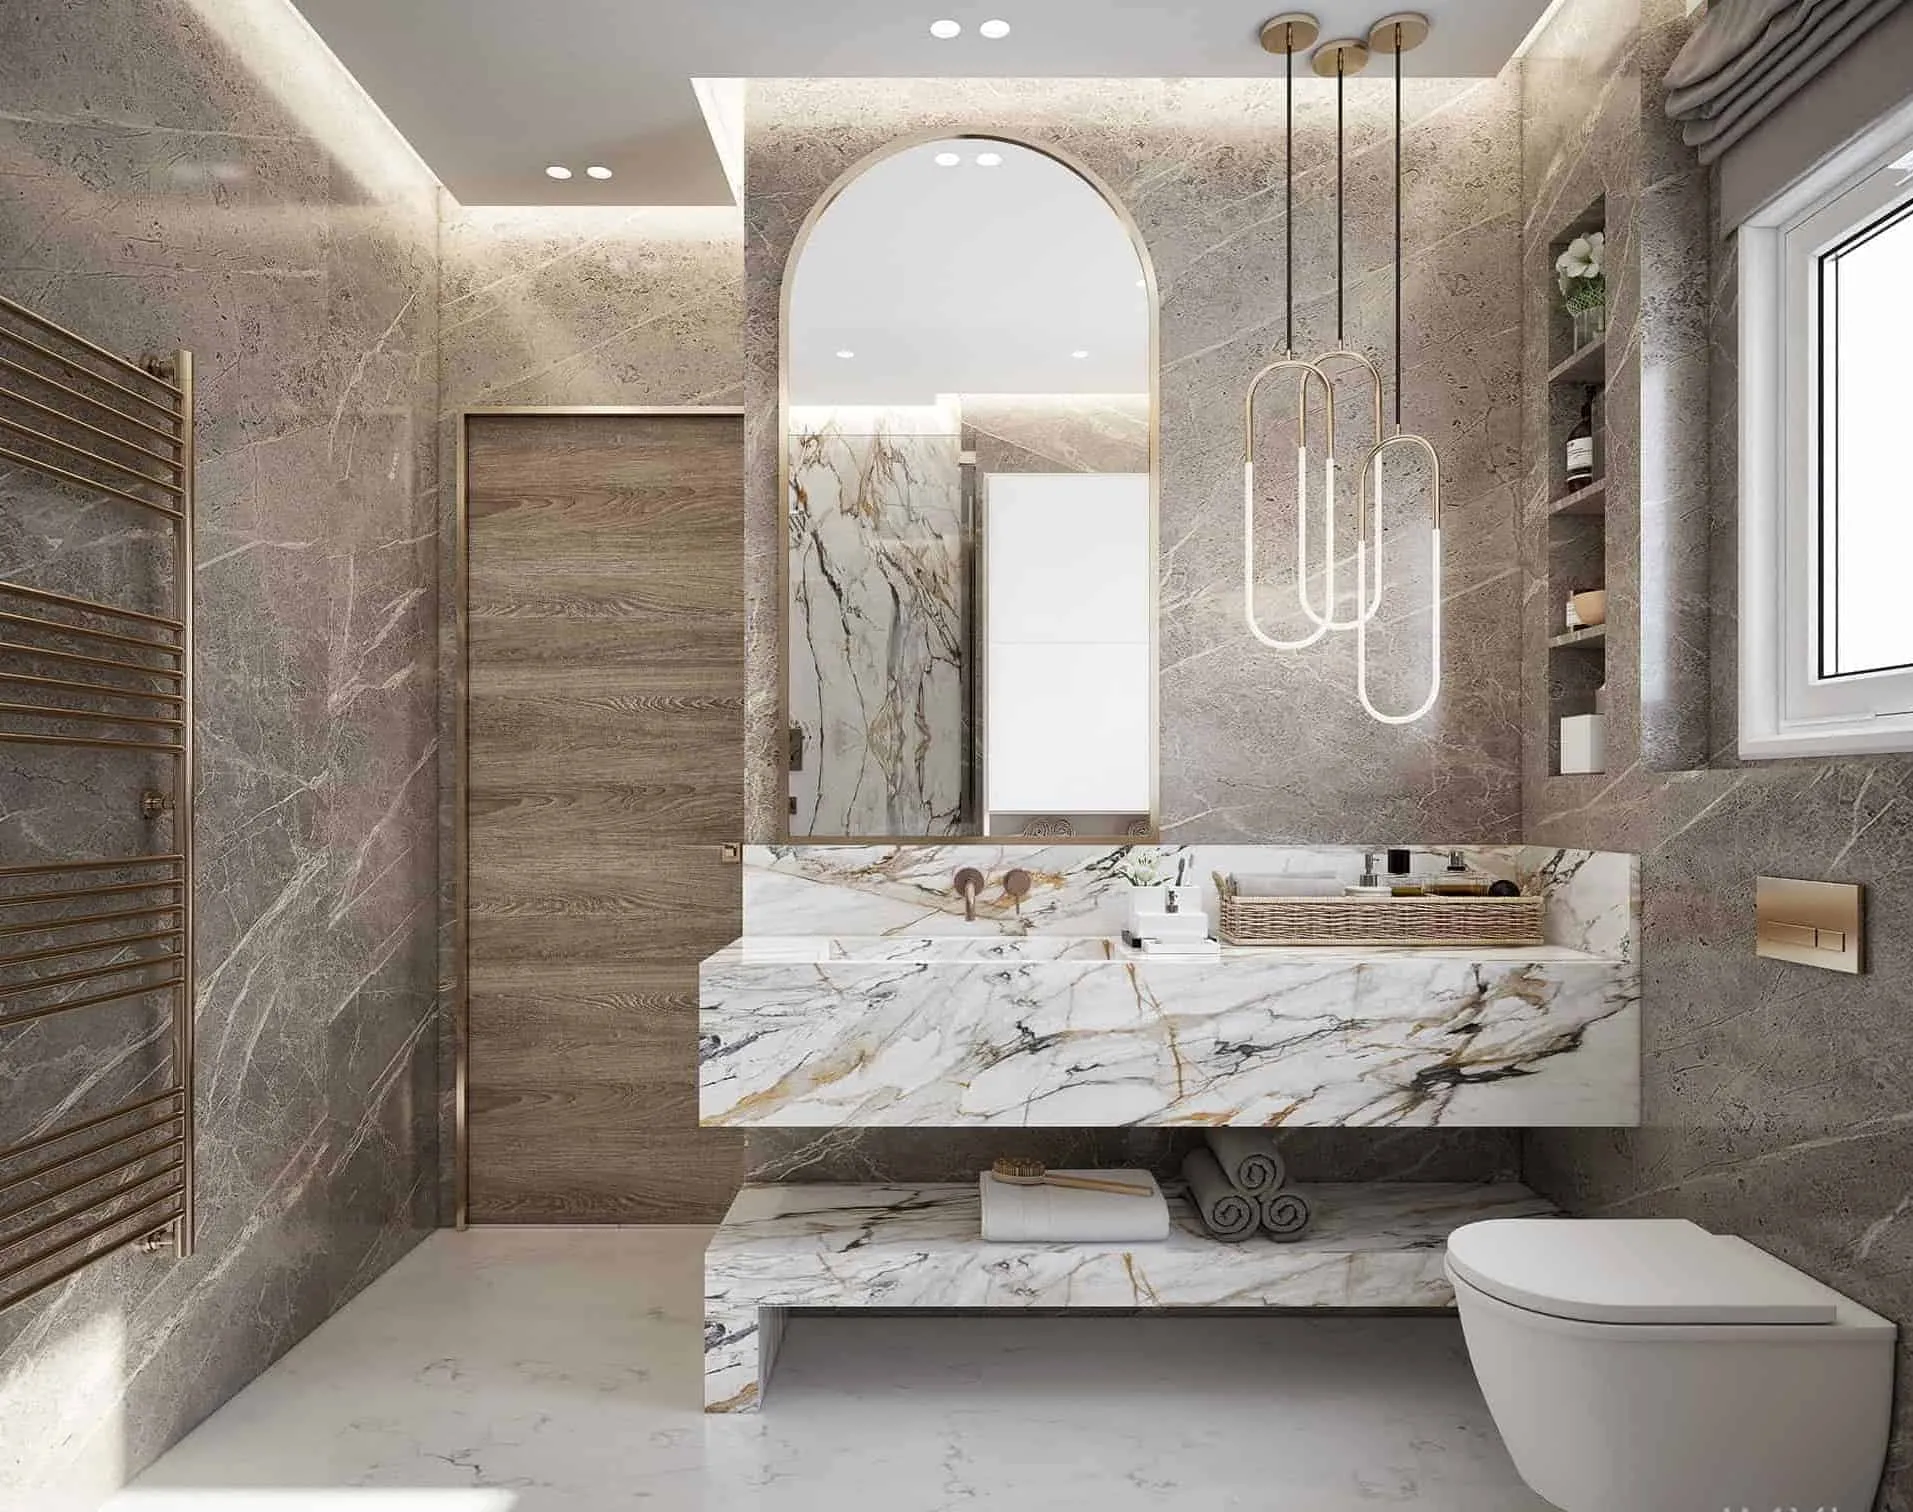 light brown bathroom walls with a mirror and bath tub